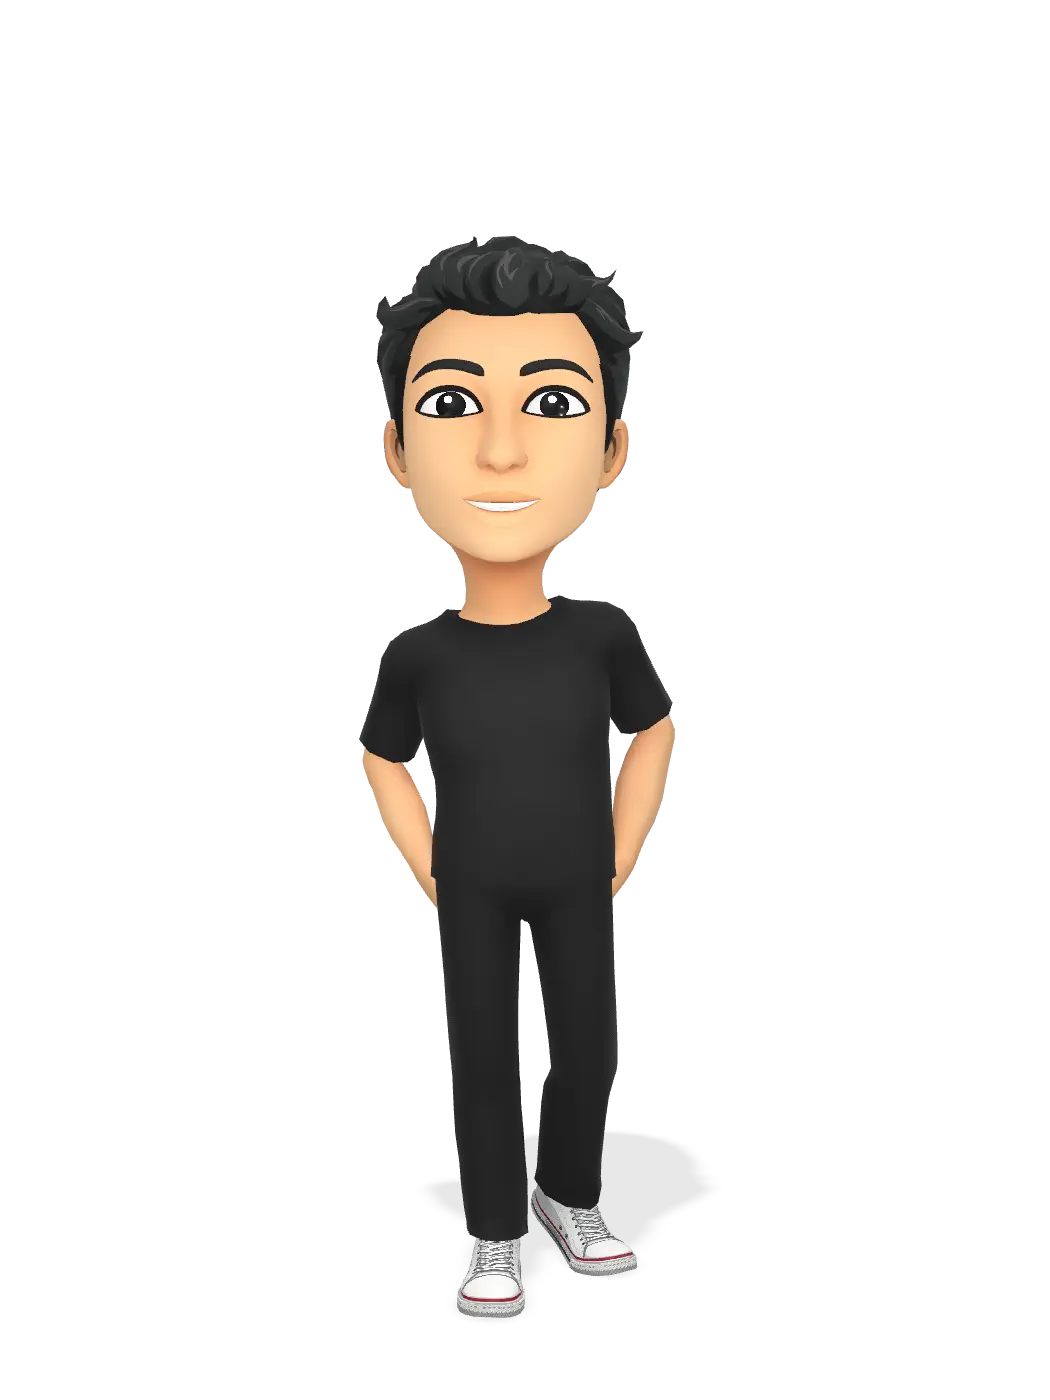 3D Bitmoji for anshuman_v2 avatar